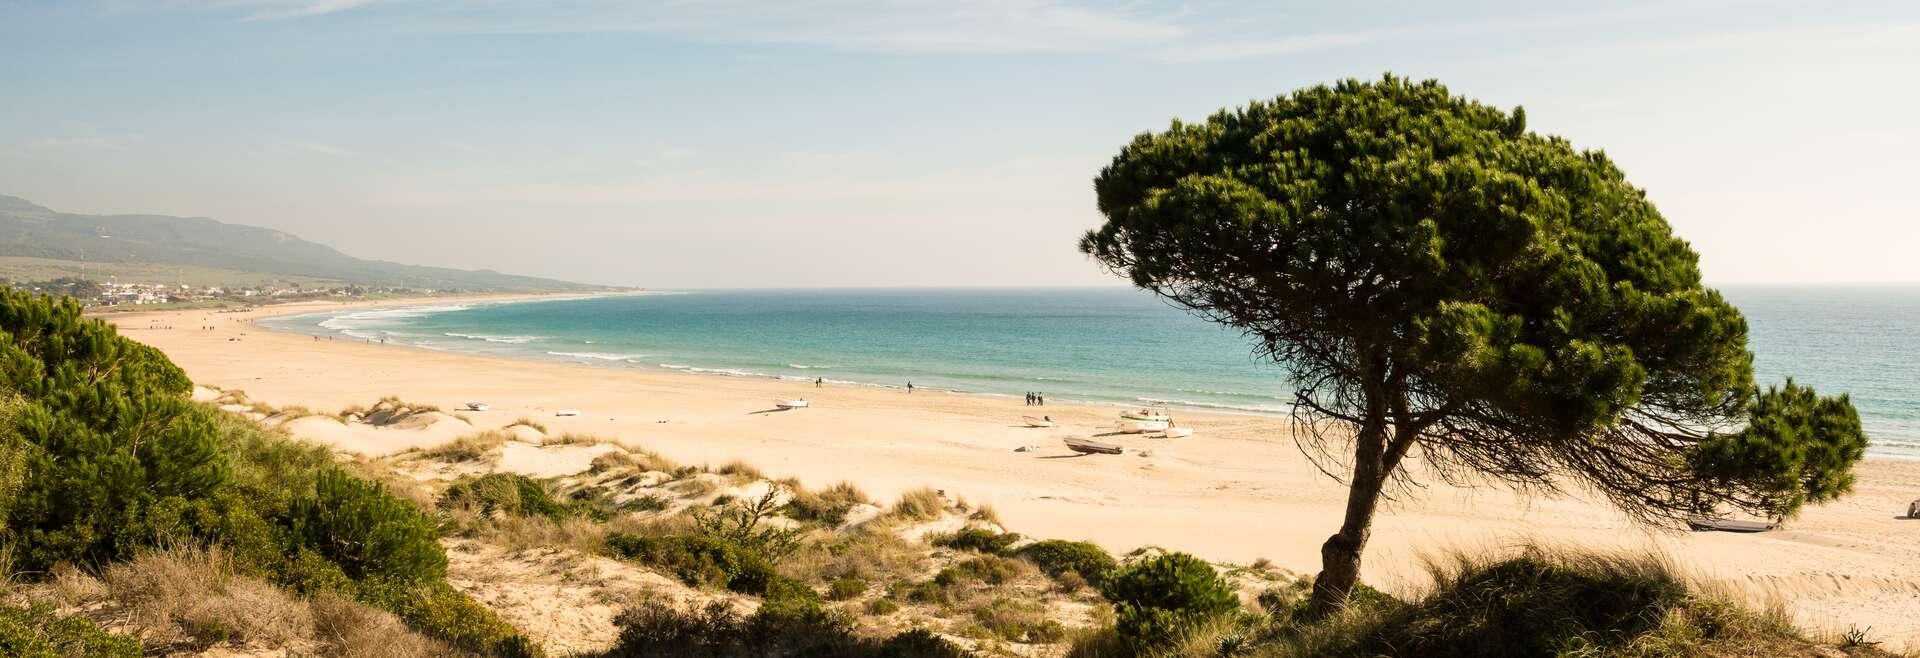 Bolonia beach close to Tarifa in Costa de la Luz, Andalusia, Southern Spain. Beautiful landscape of golden beach, coastal vegetation with stone pine tree. Turquoise Atlantic ocean,sunny winter day.